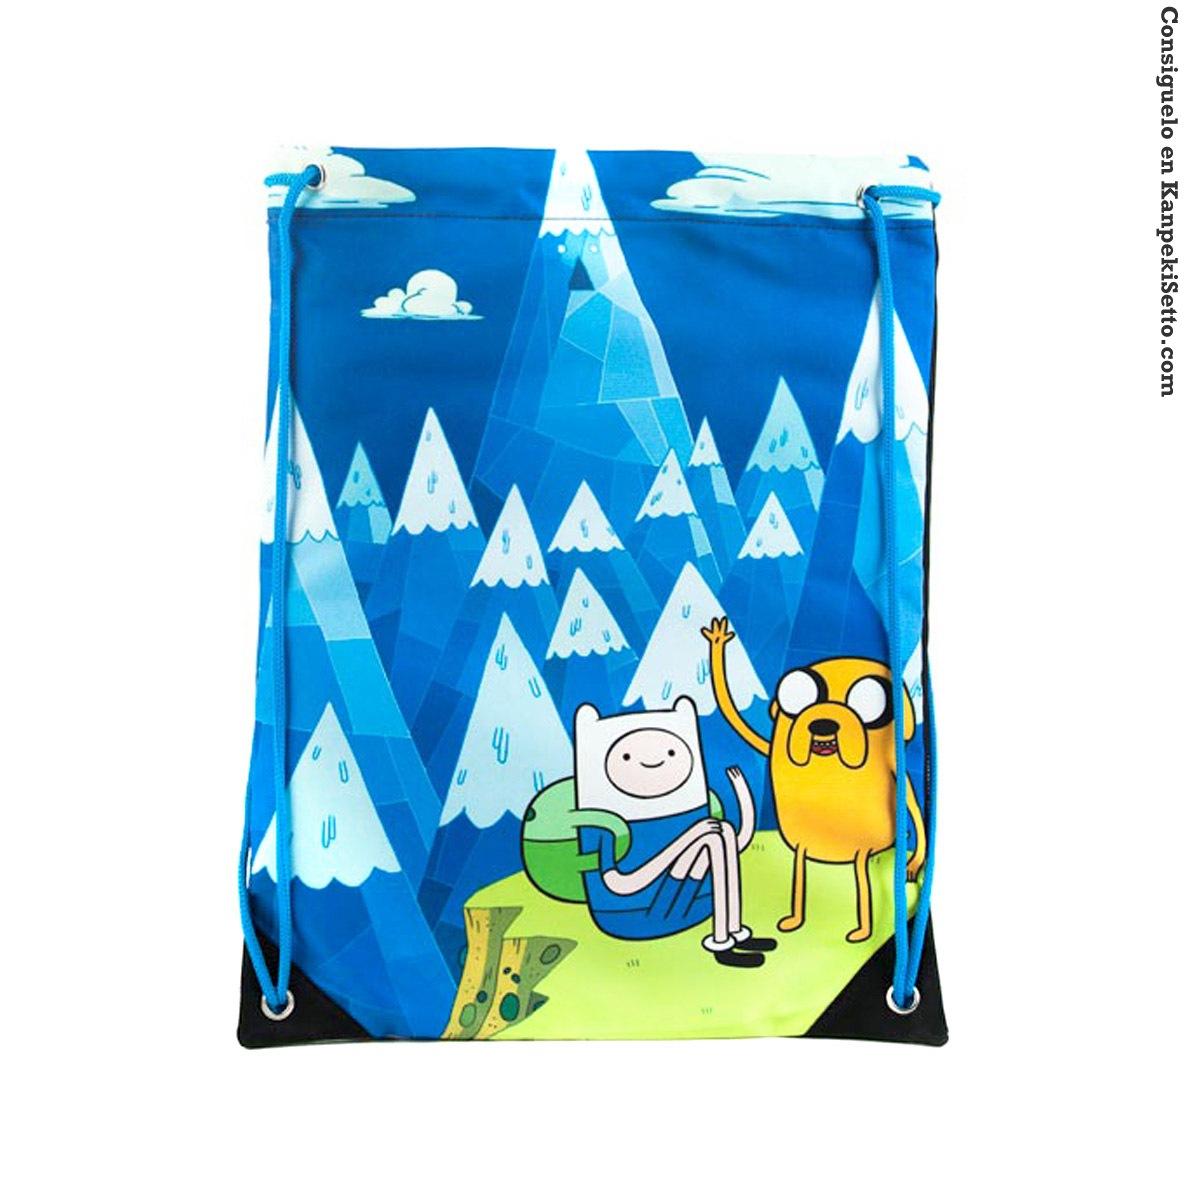 Foto Adventure Time Bolso De Tela Blue Mountain J Y F foto 606244